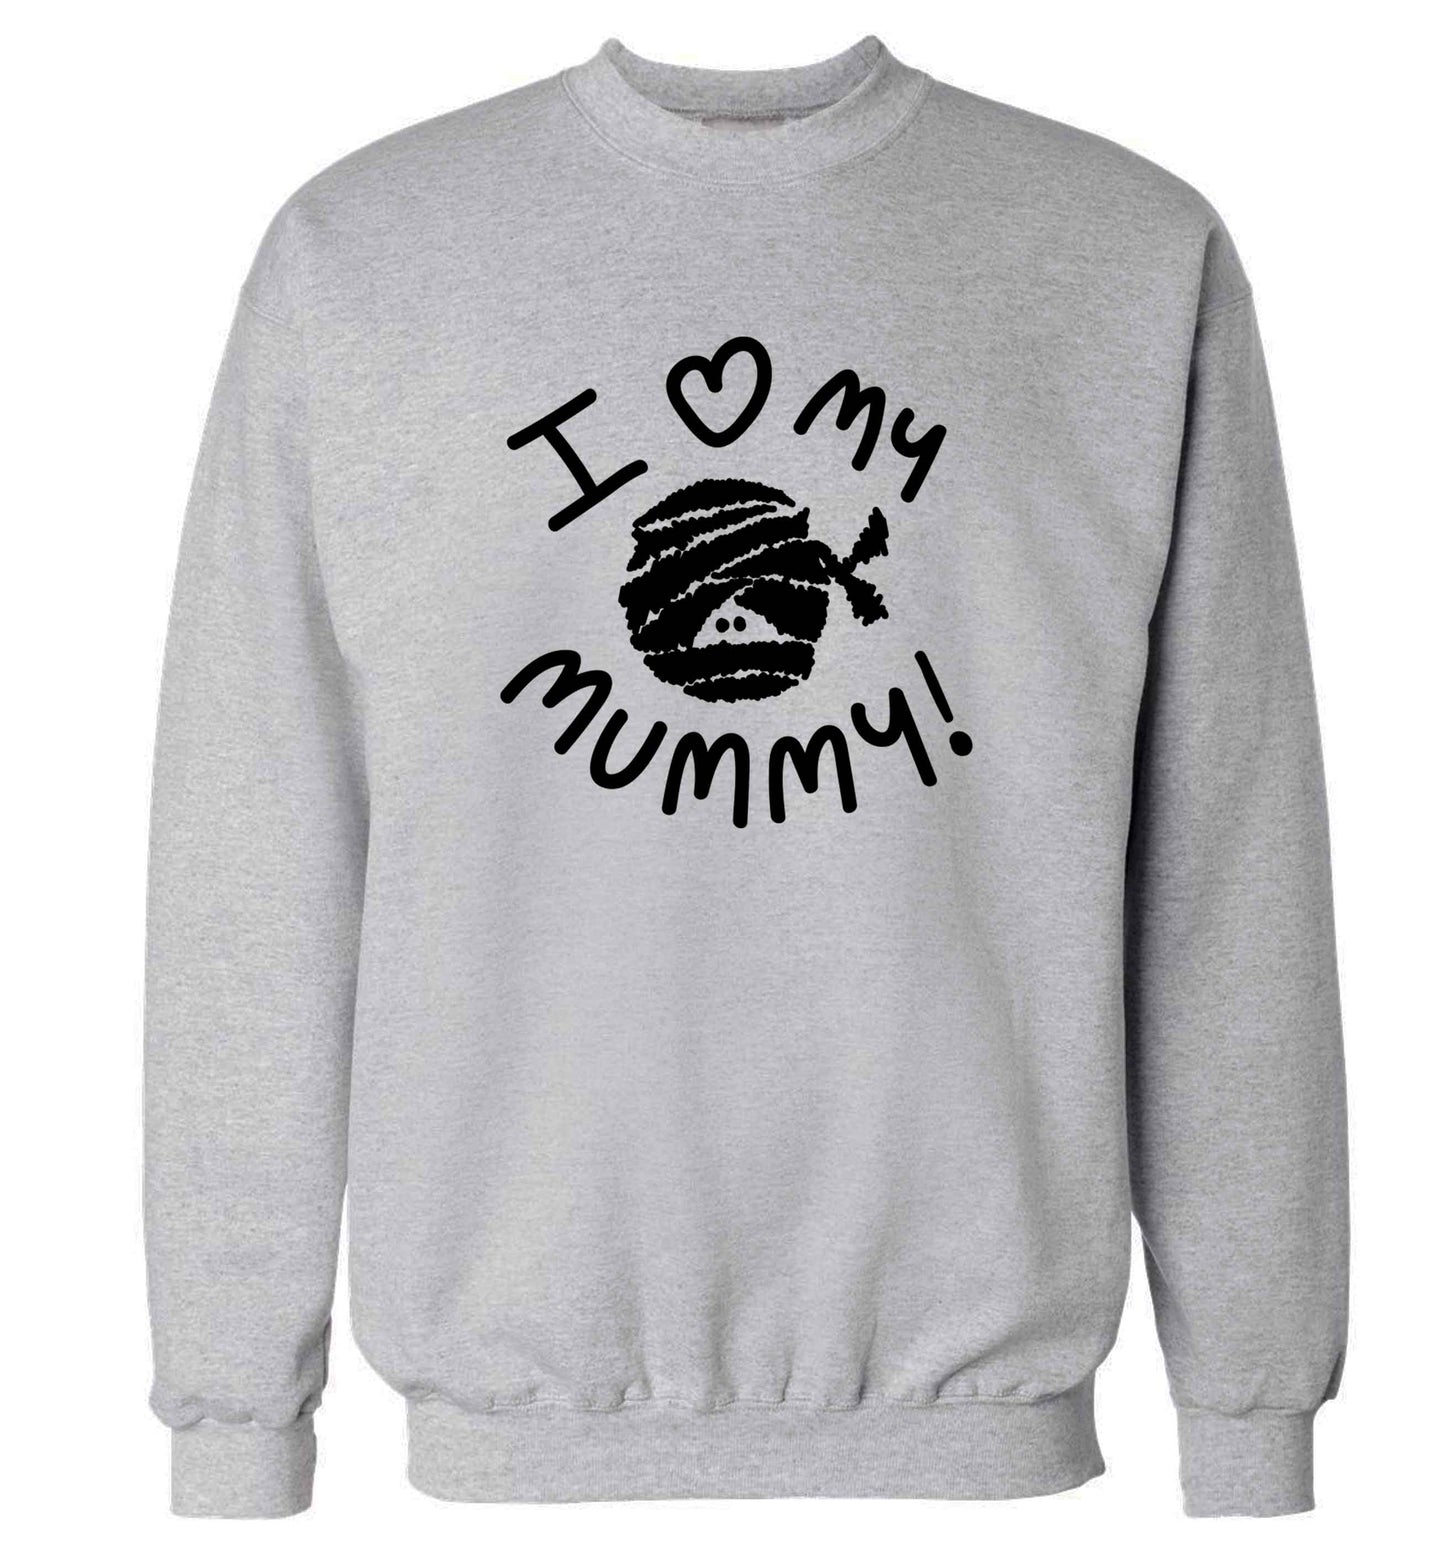 I love my mummy halloween pun adult's unisex grey sweater 2XL